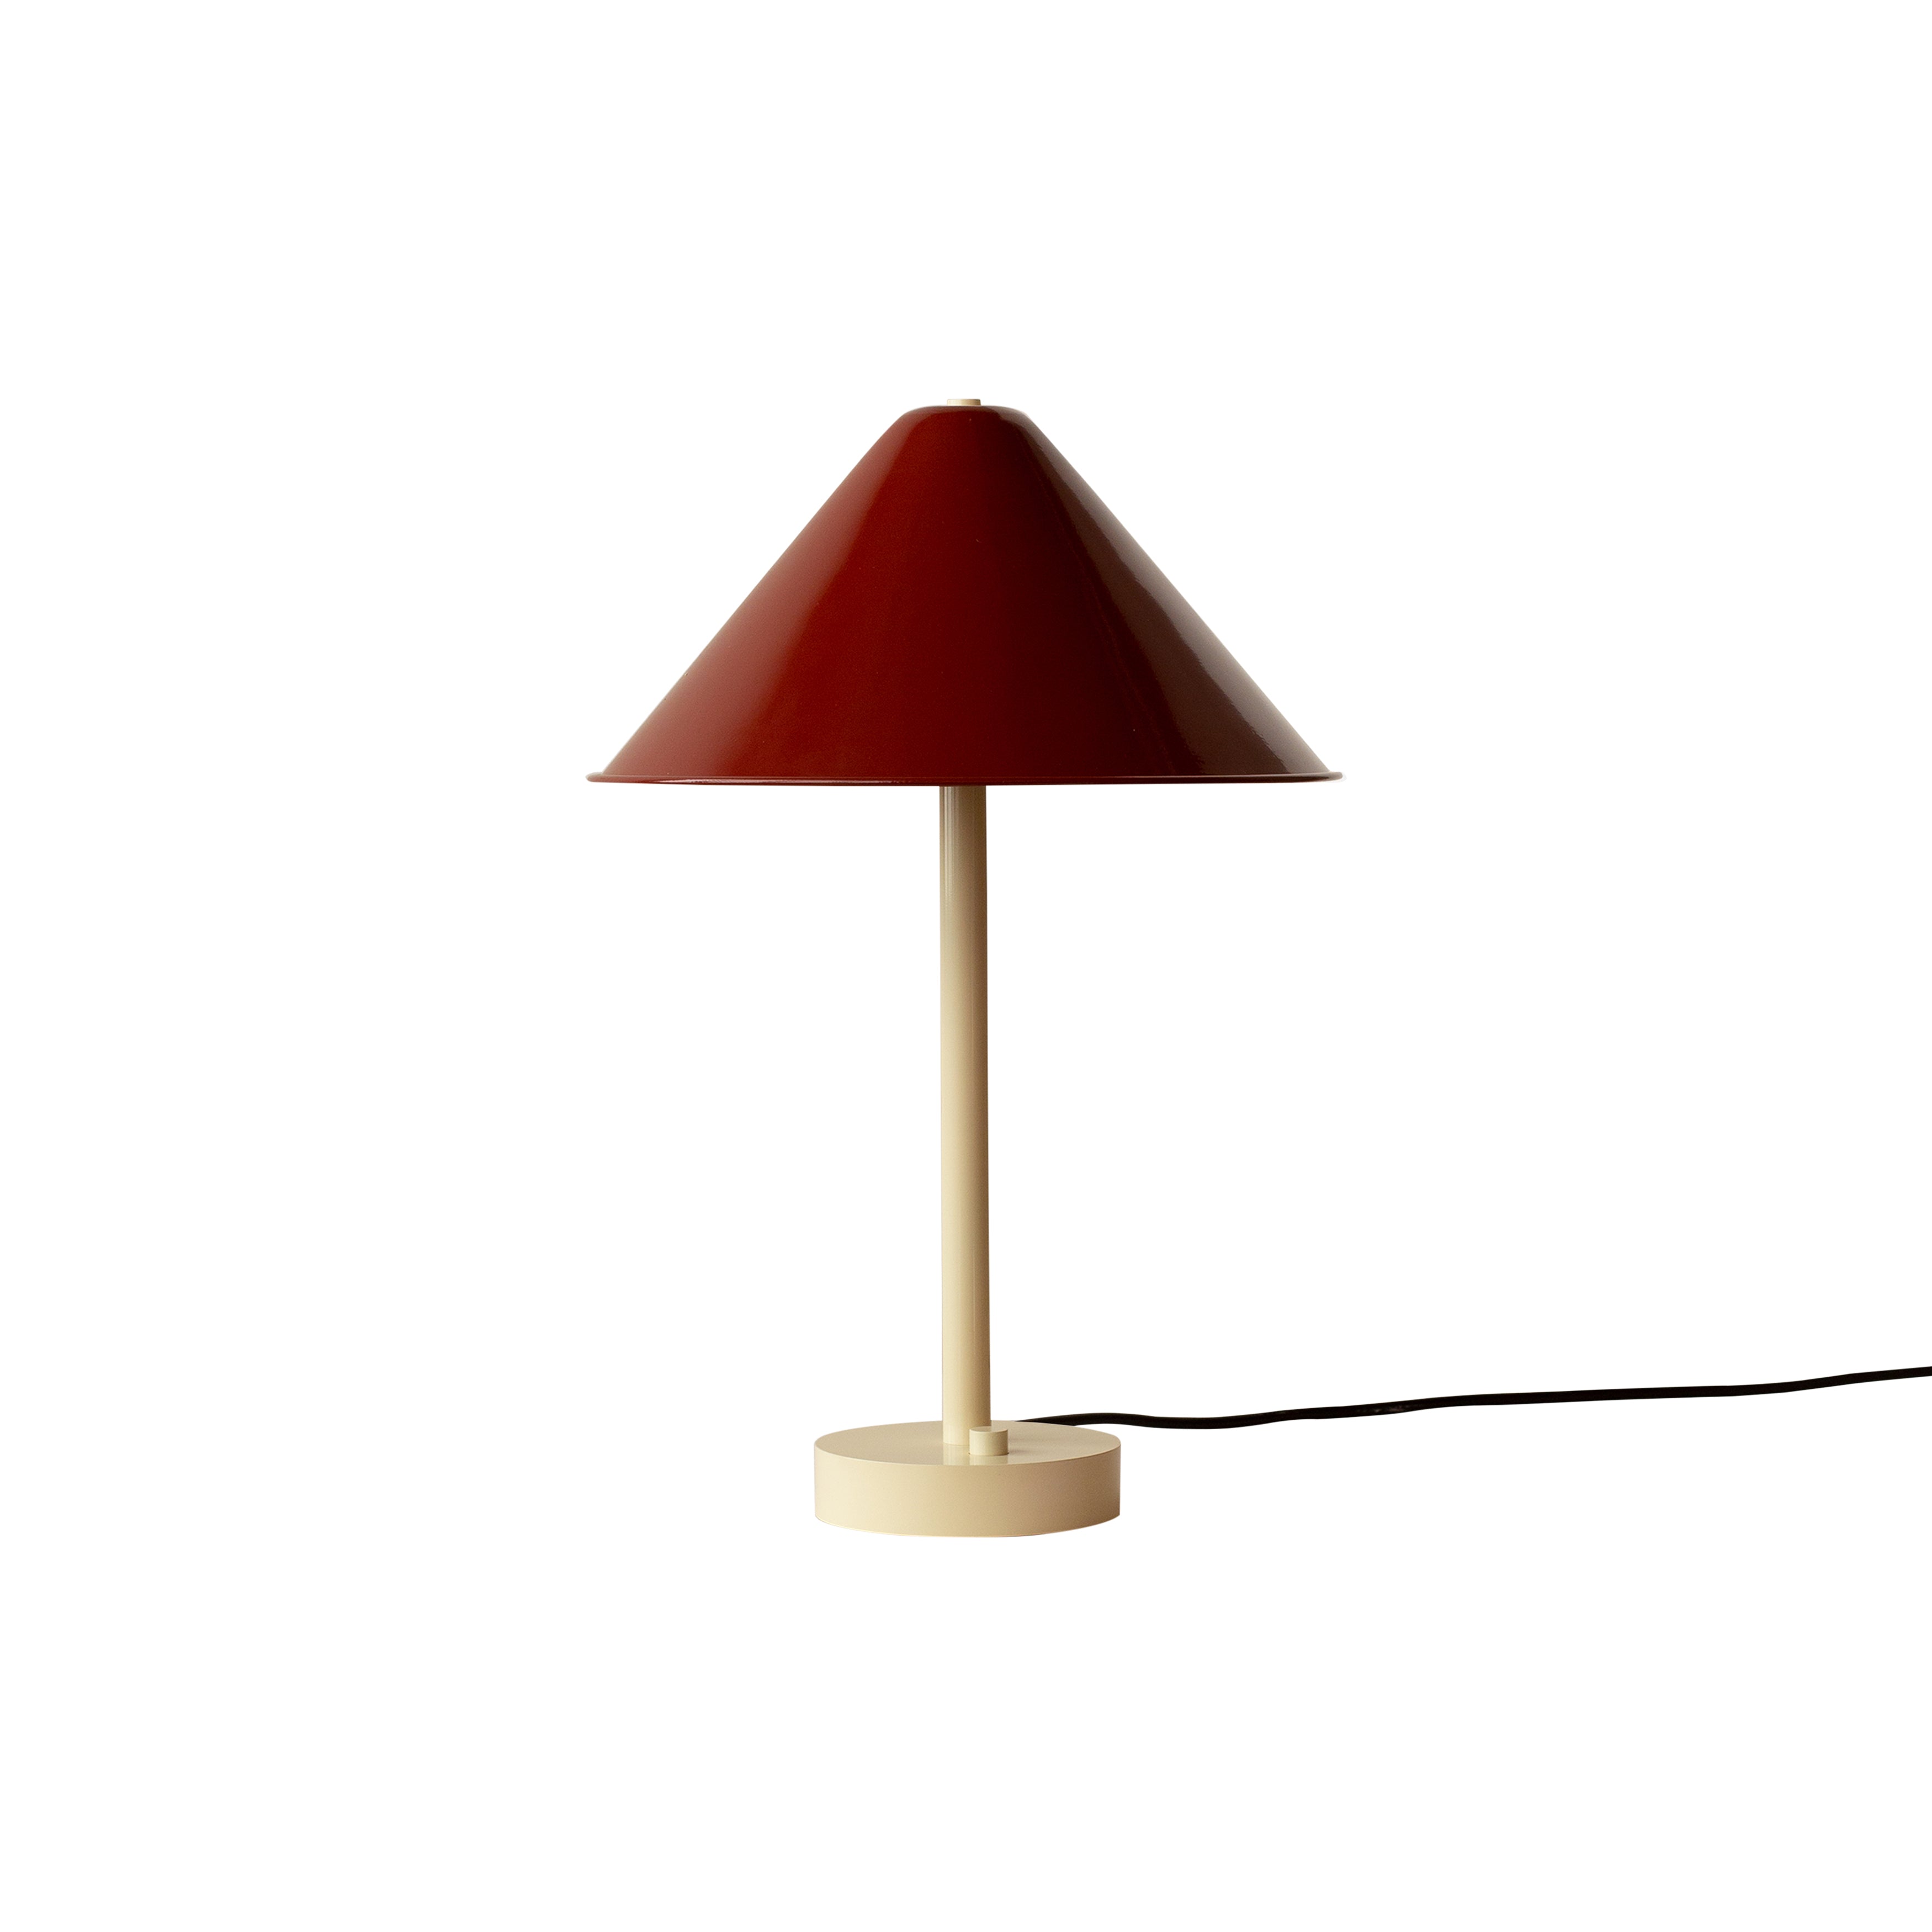 Tipi Table Lamp: Oxide Red + Bone